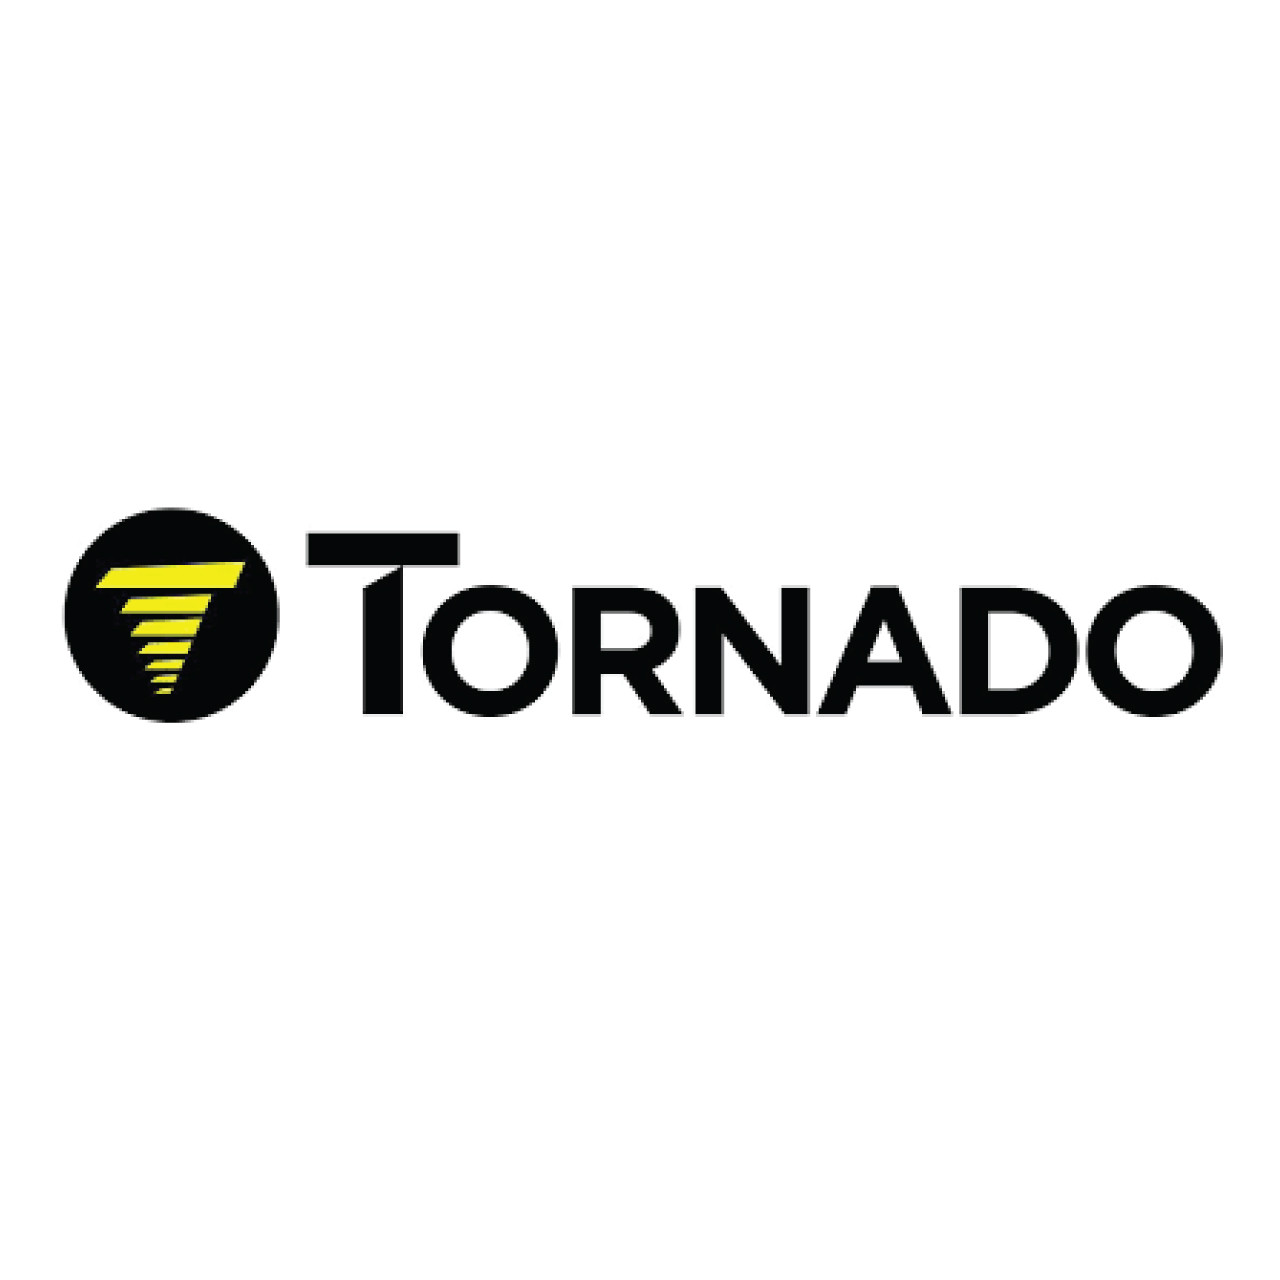 39105, Tornado 39105, Tornado MOTOR DRIVE, Tornado parts, tornado scrubber parts, tornado vacuum parts, tornado extractor parts, tornado floor machine parts